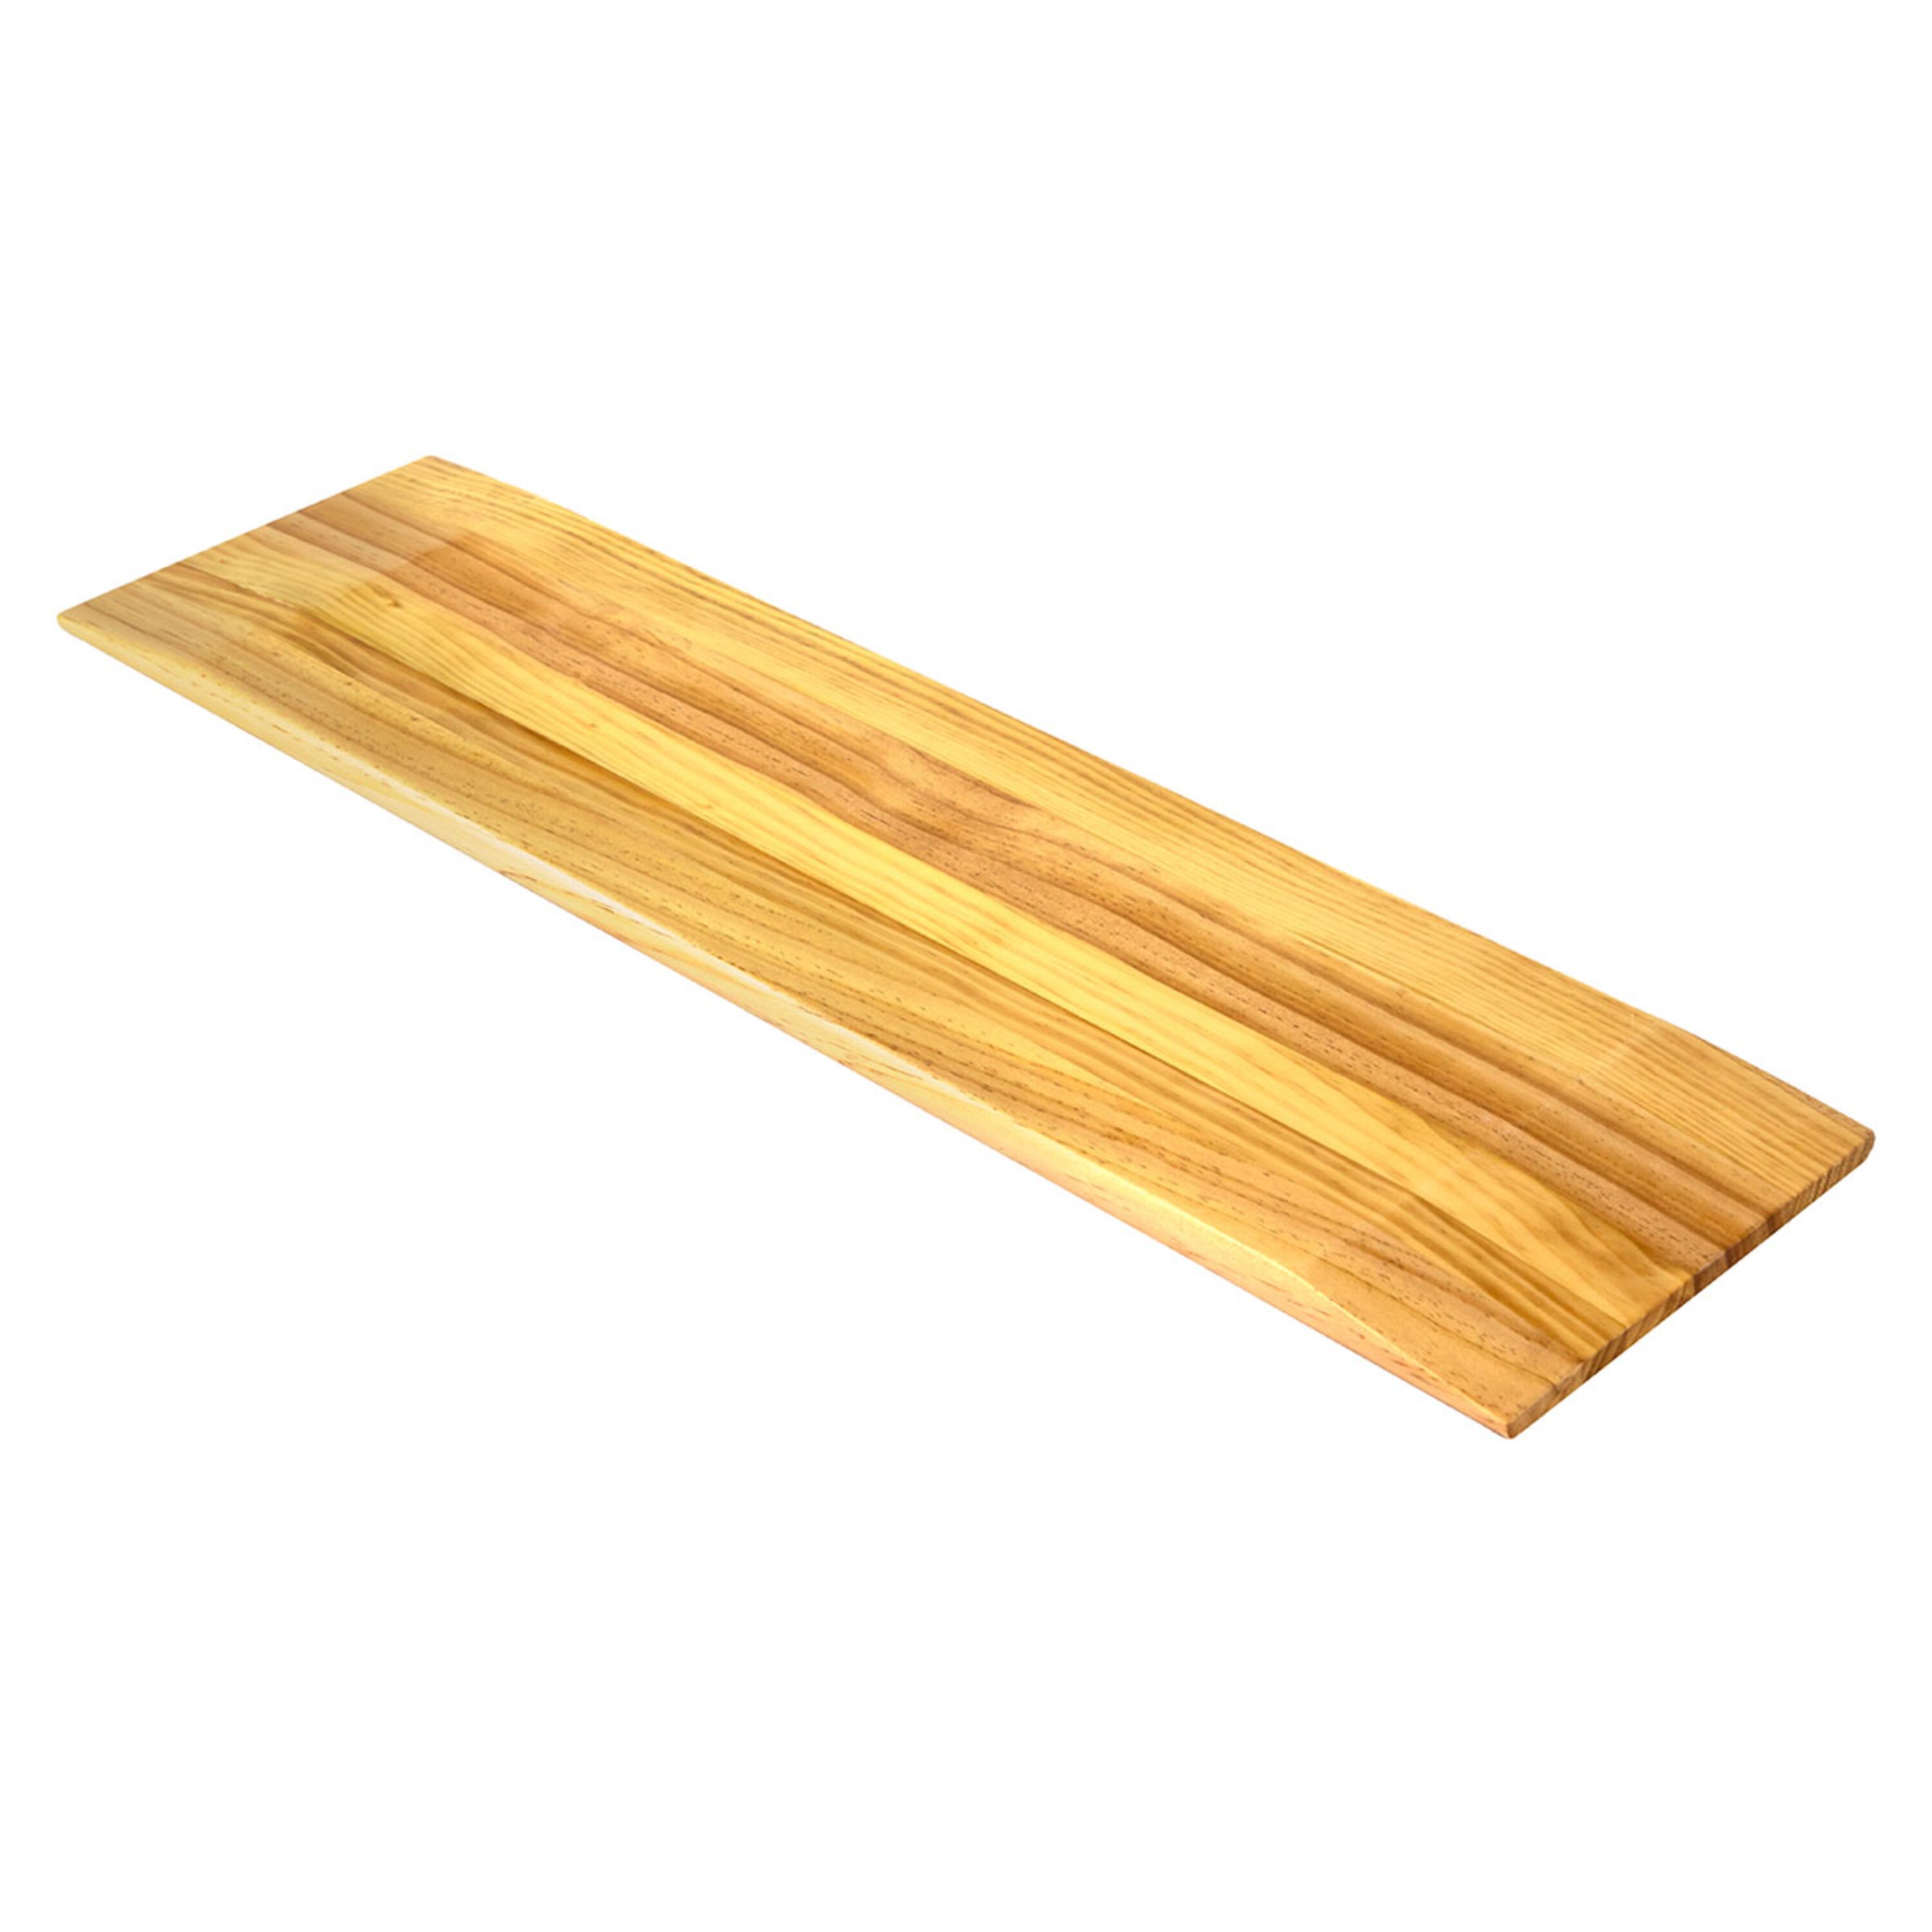 FabLife Wood Transfer Board, No Handgrips, 8" x 30"